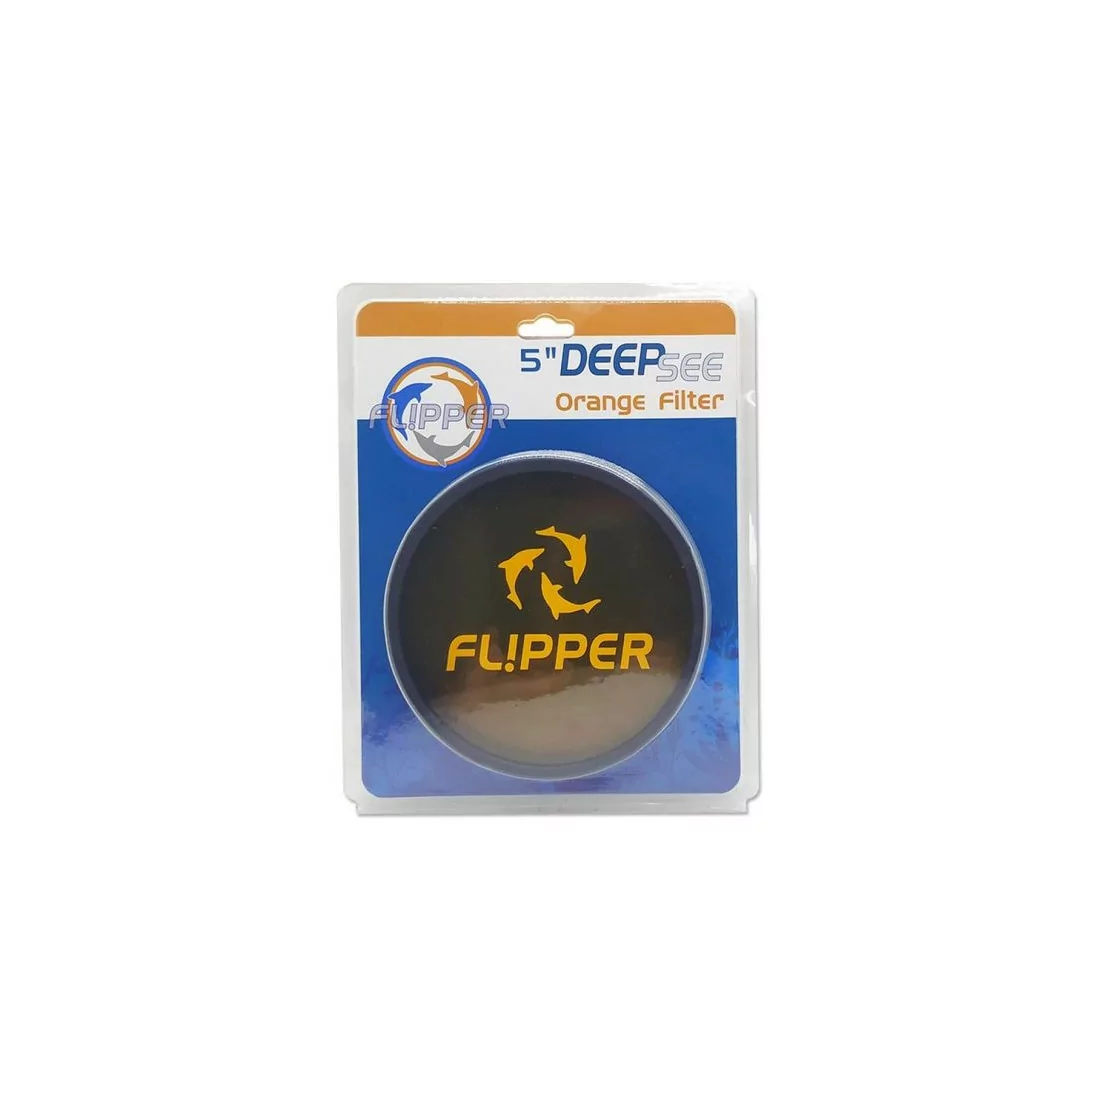 Flipper DeepSee Max 5" filtre orange